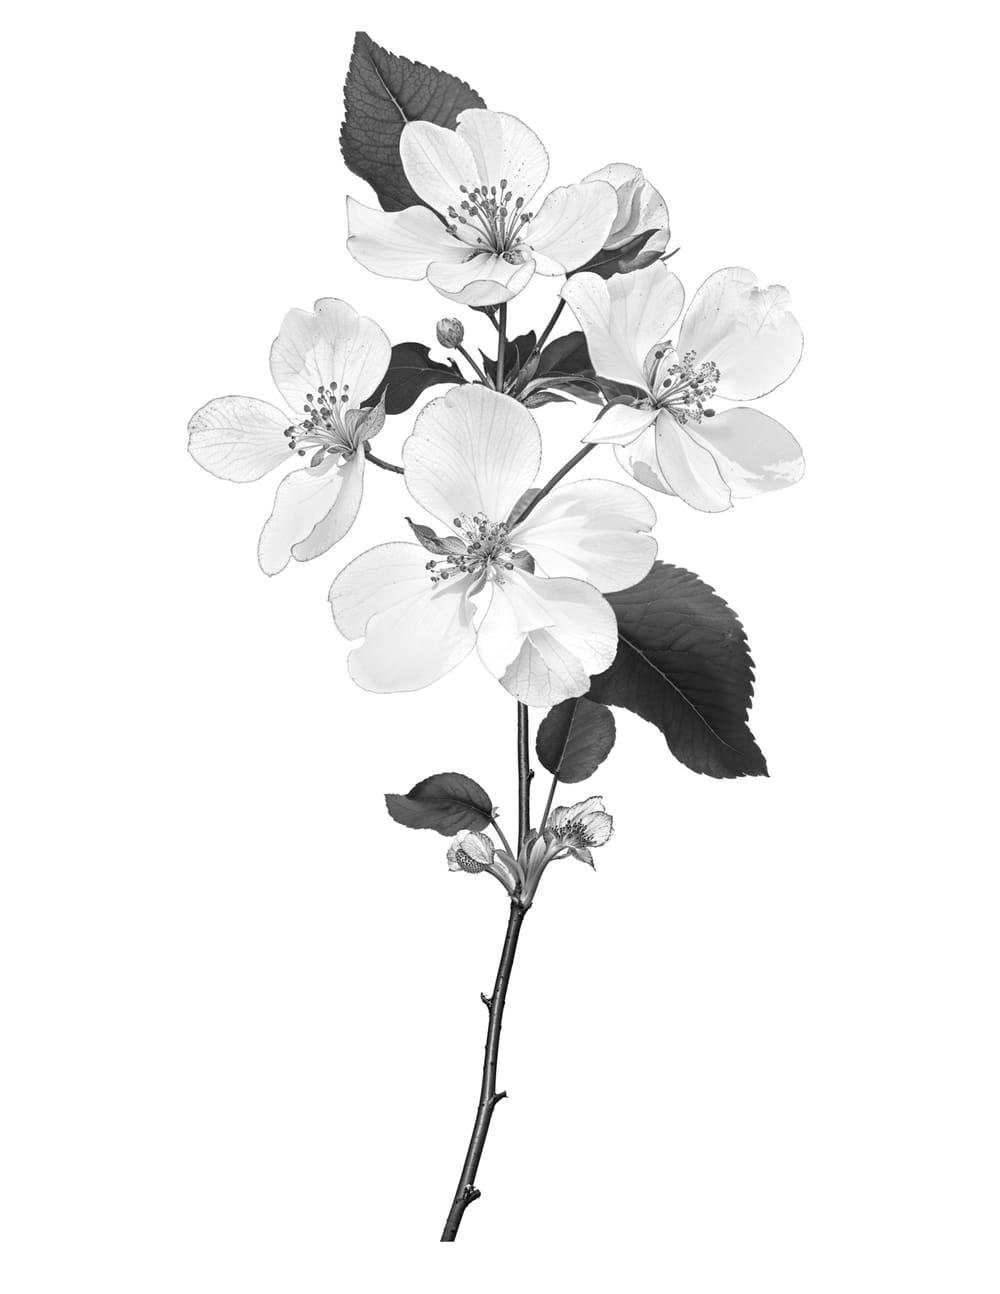 Apple blossom configuration